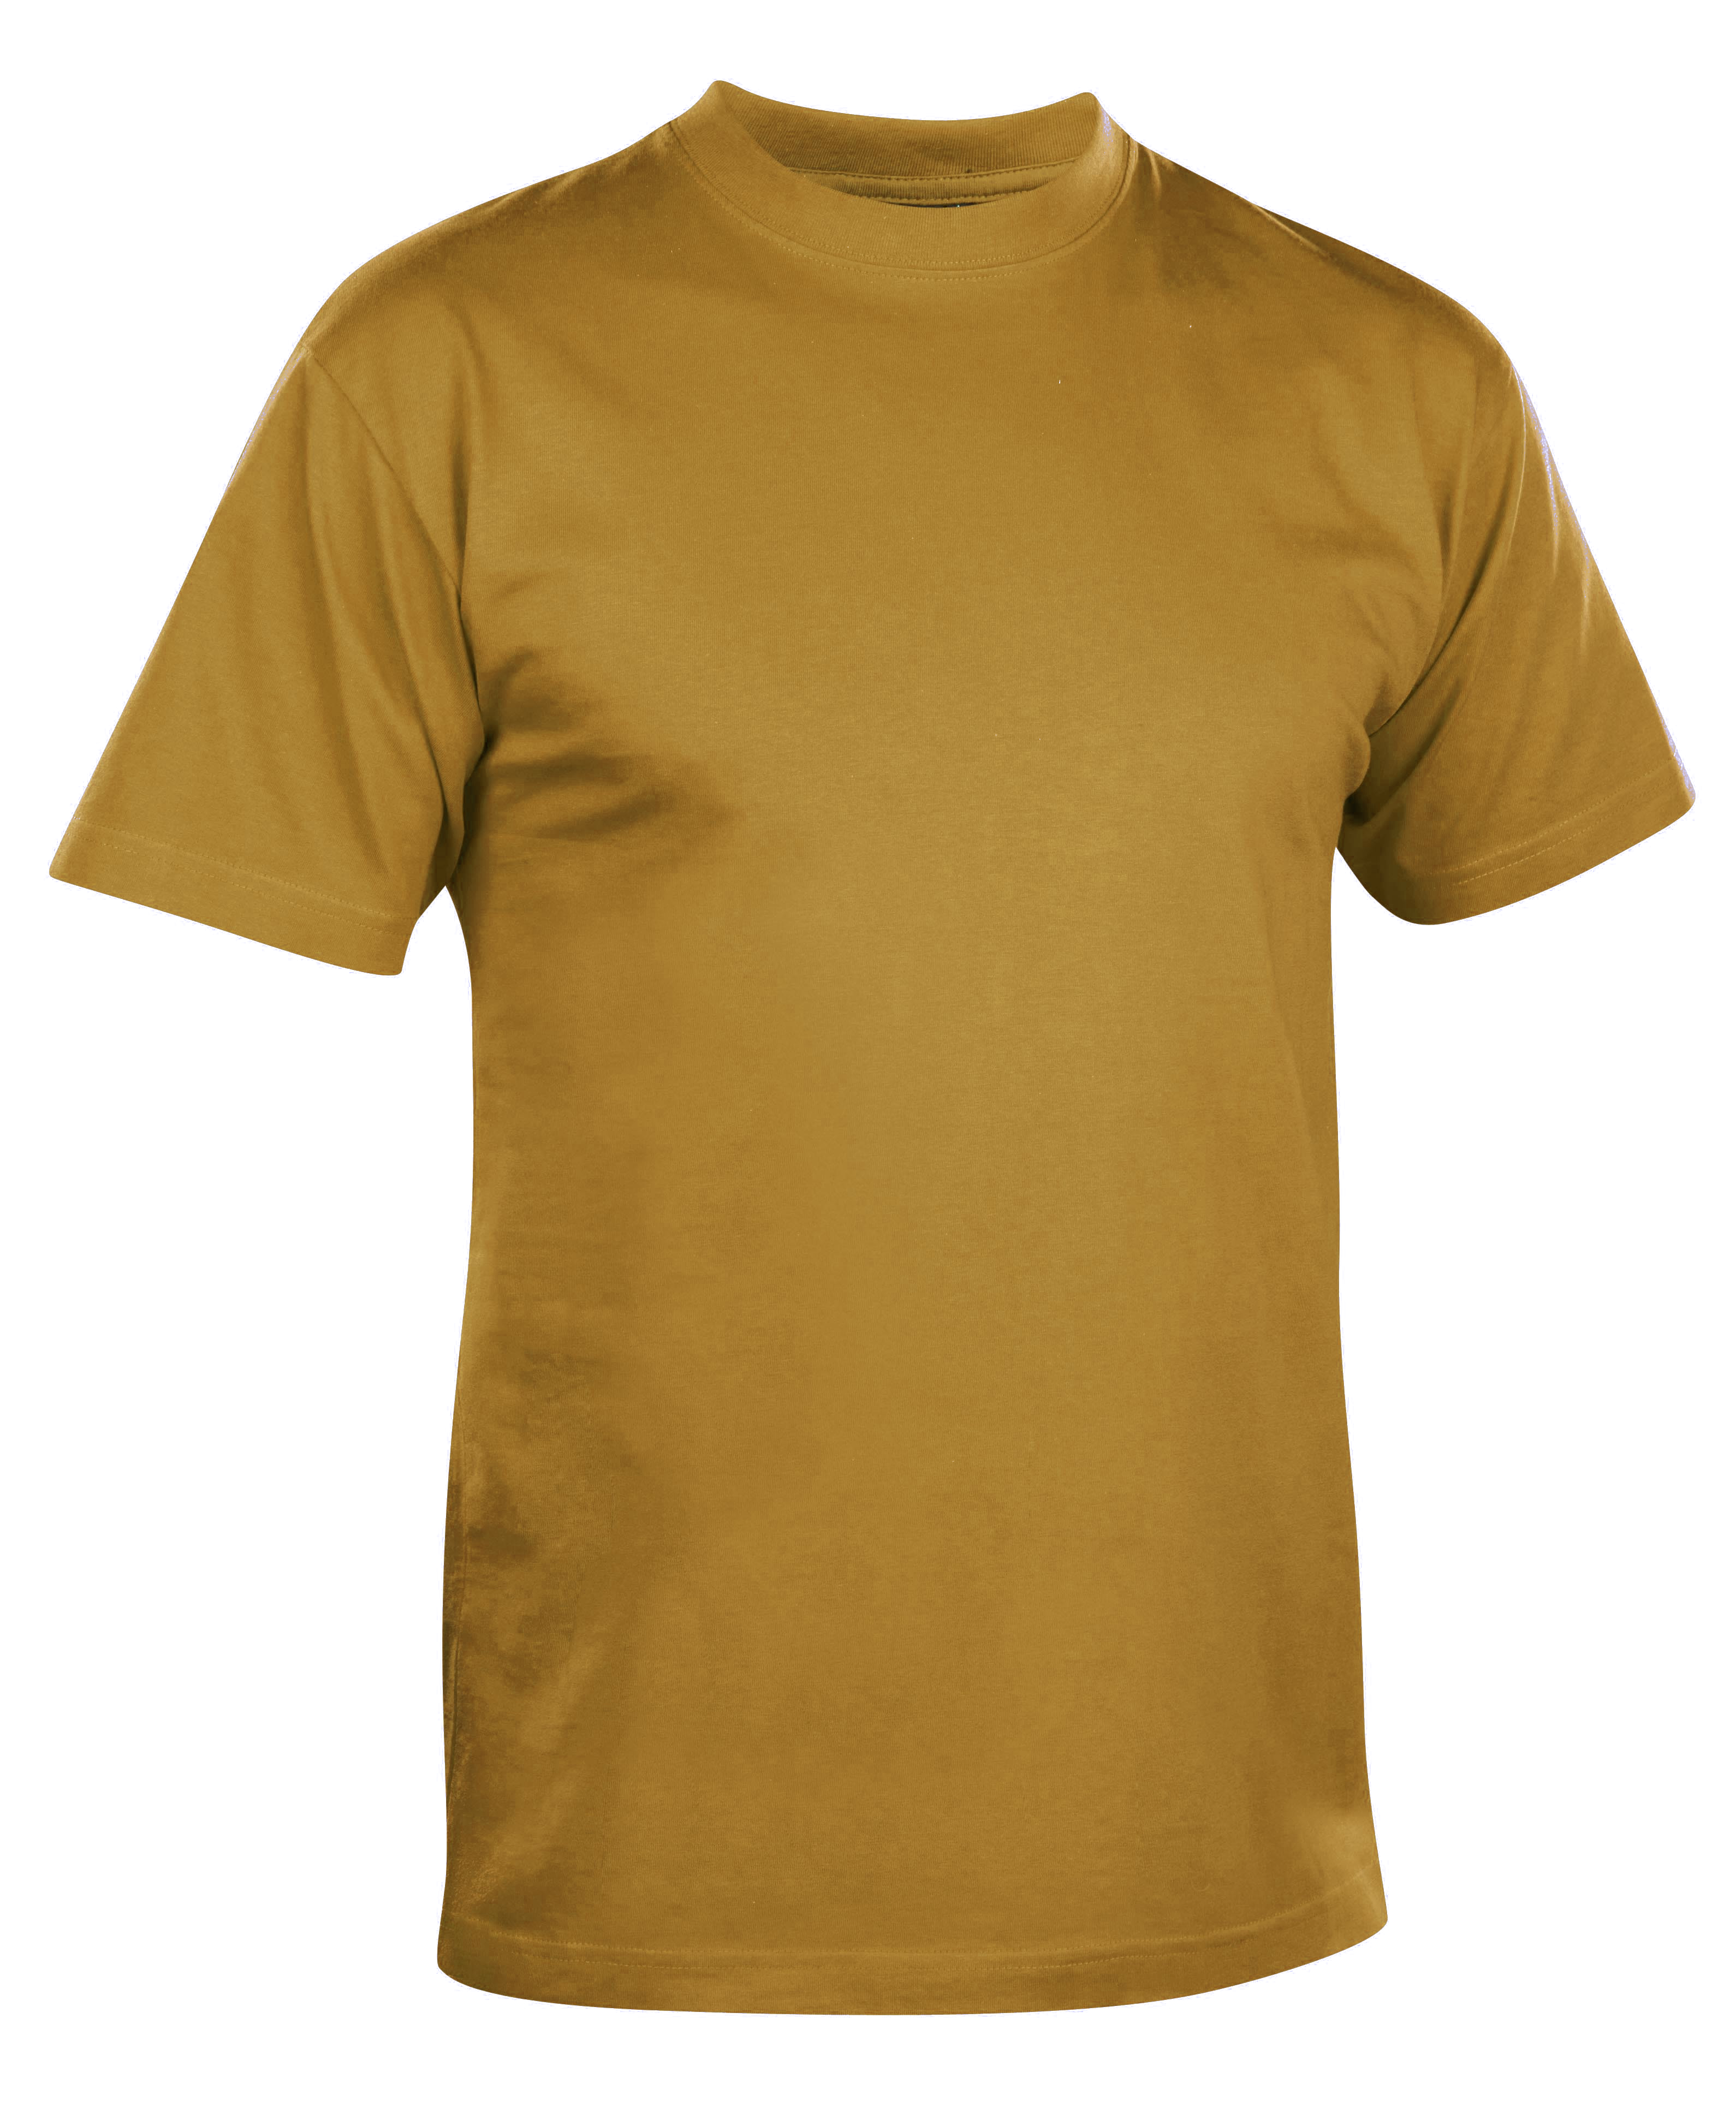 Brown T-Shirt PNG Image